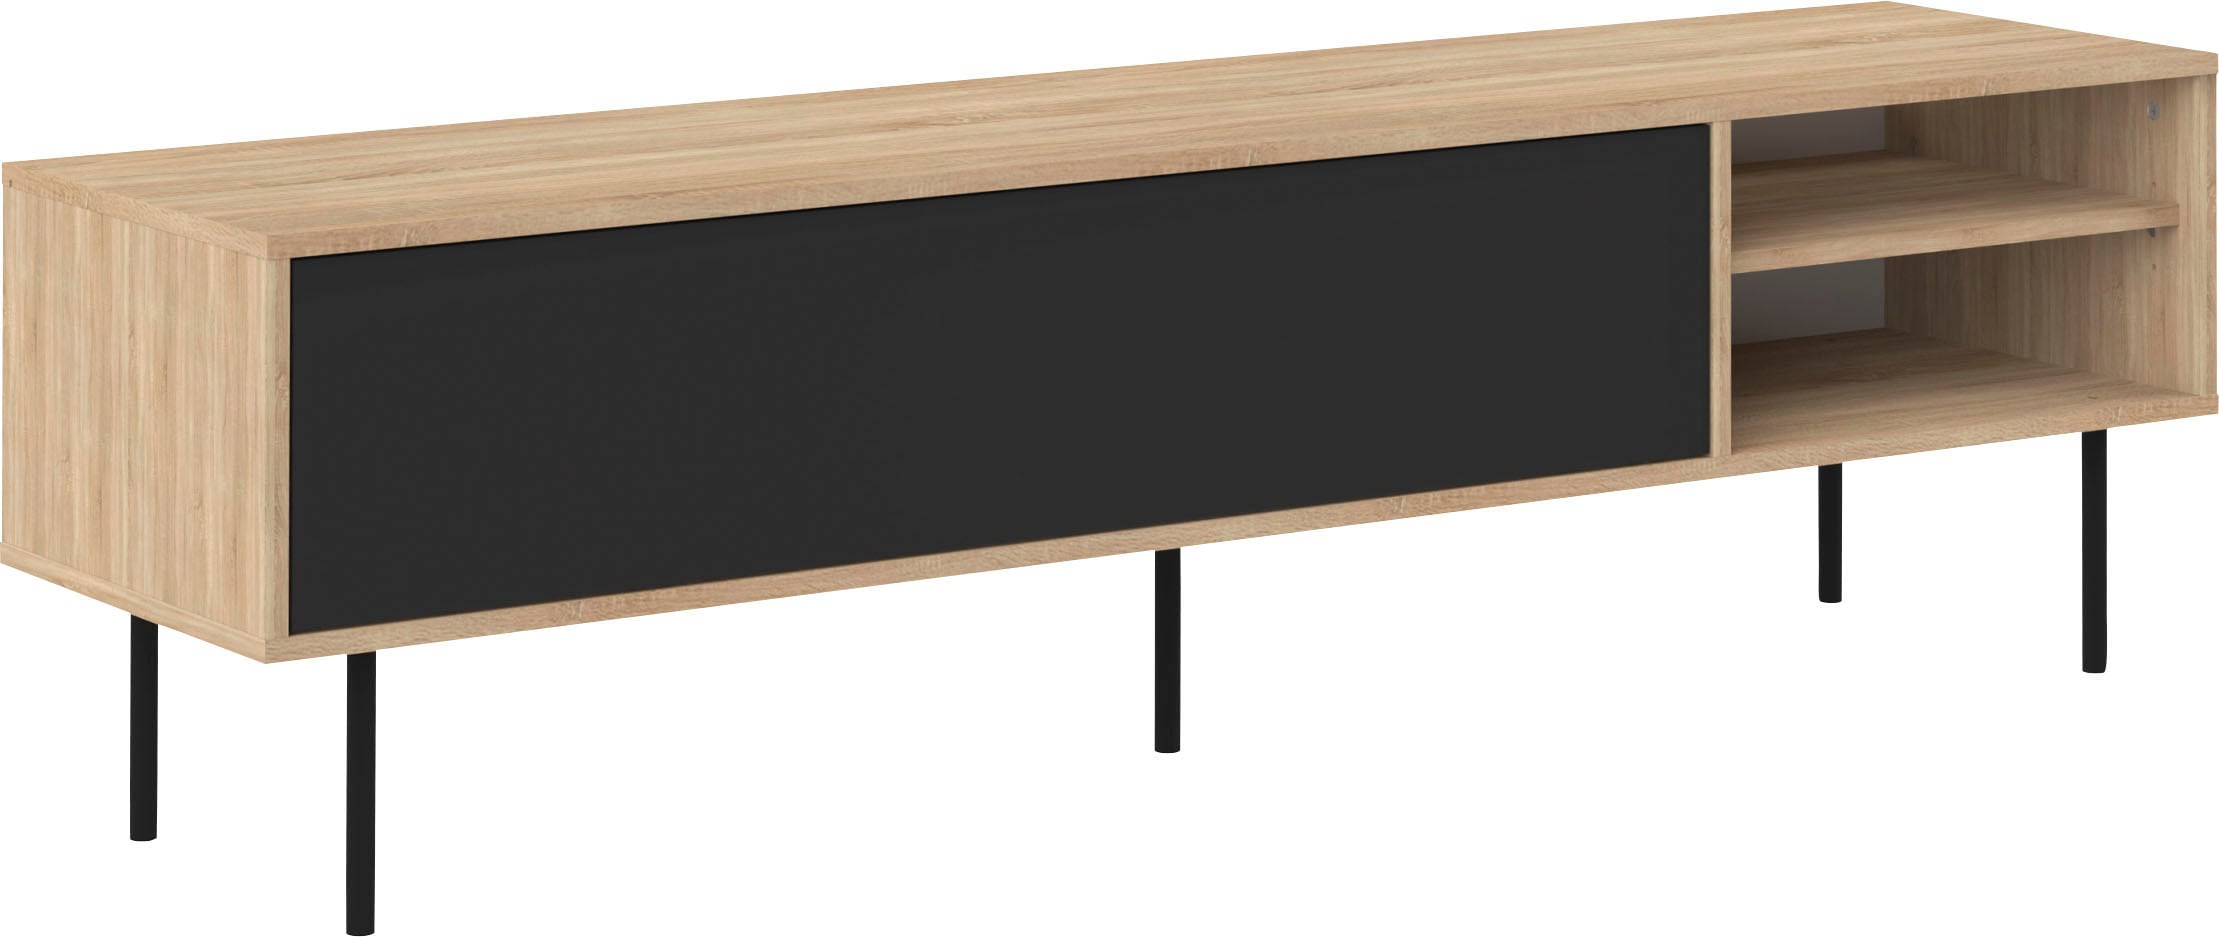 TemaHome Lowboard »AMPERE«, TV-Board mit Breite 165 cm